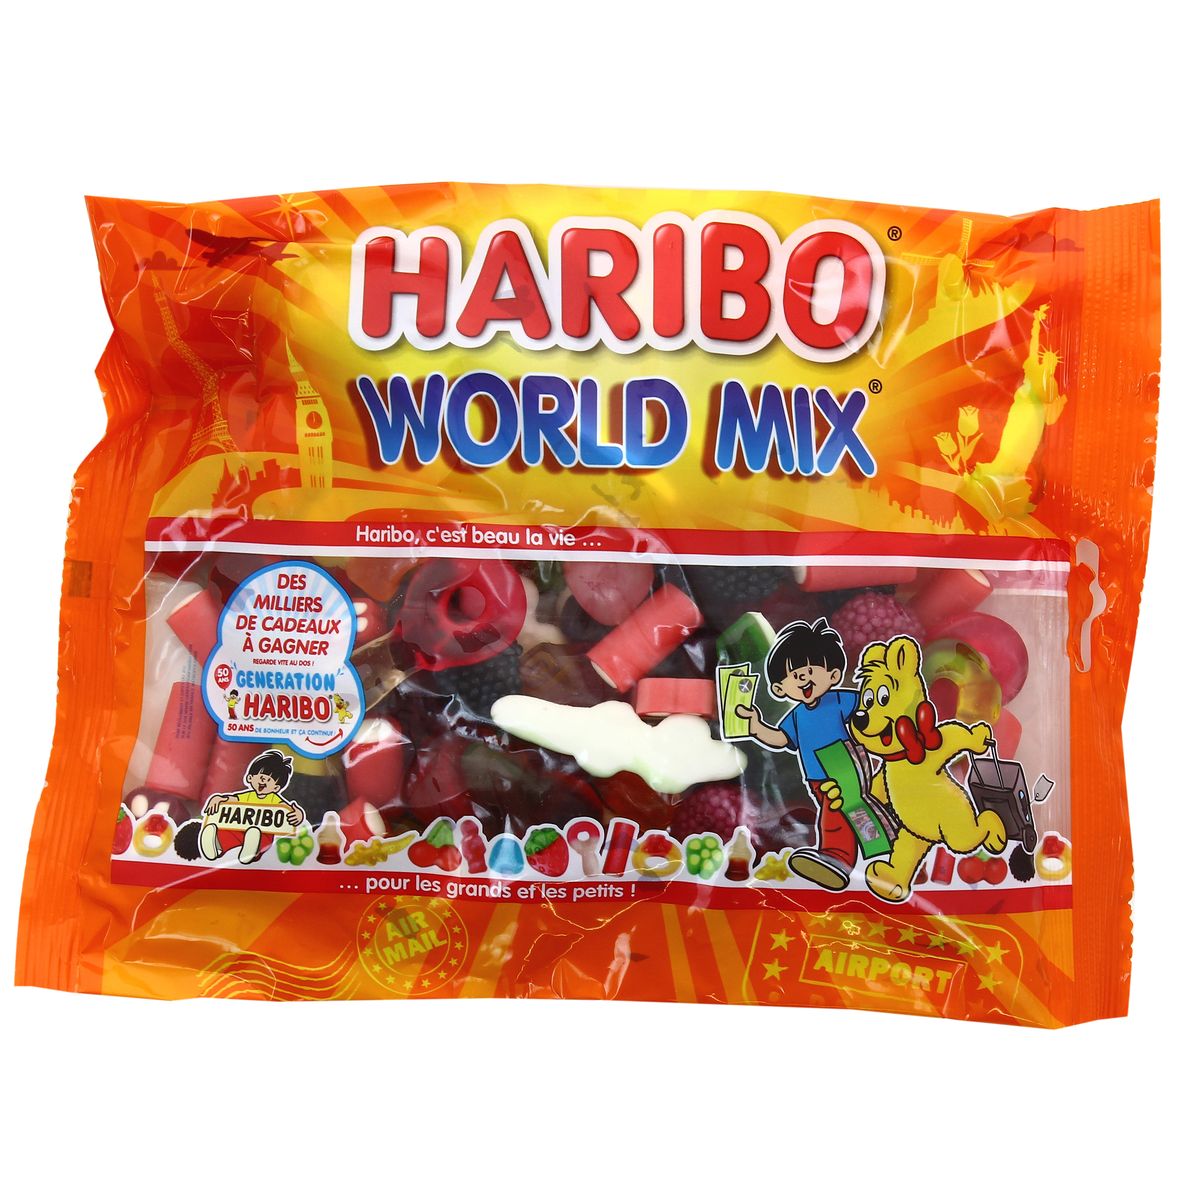 HARIBO World mix assortiment de bonbons boite 750g pas cher 